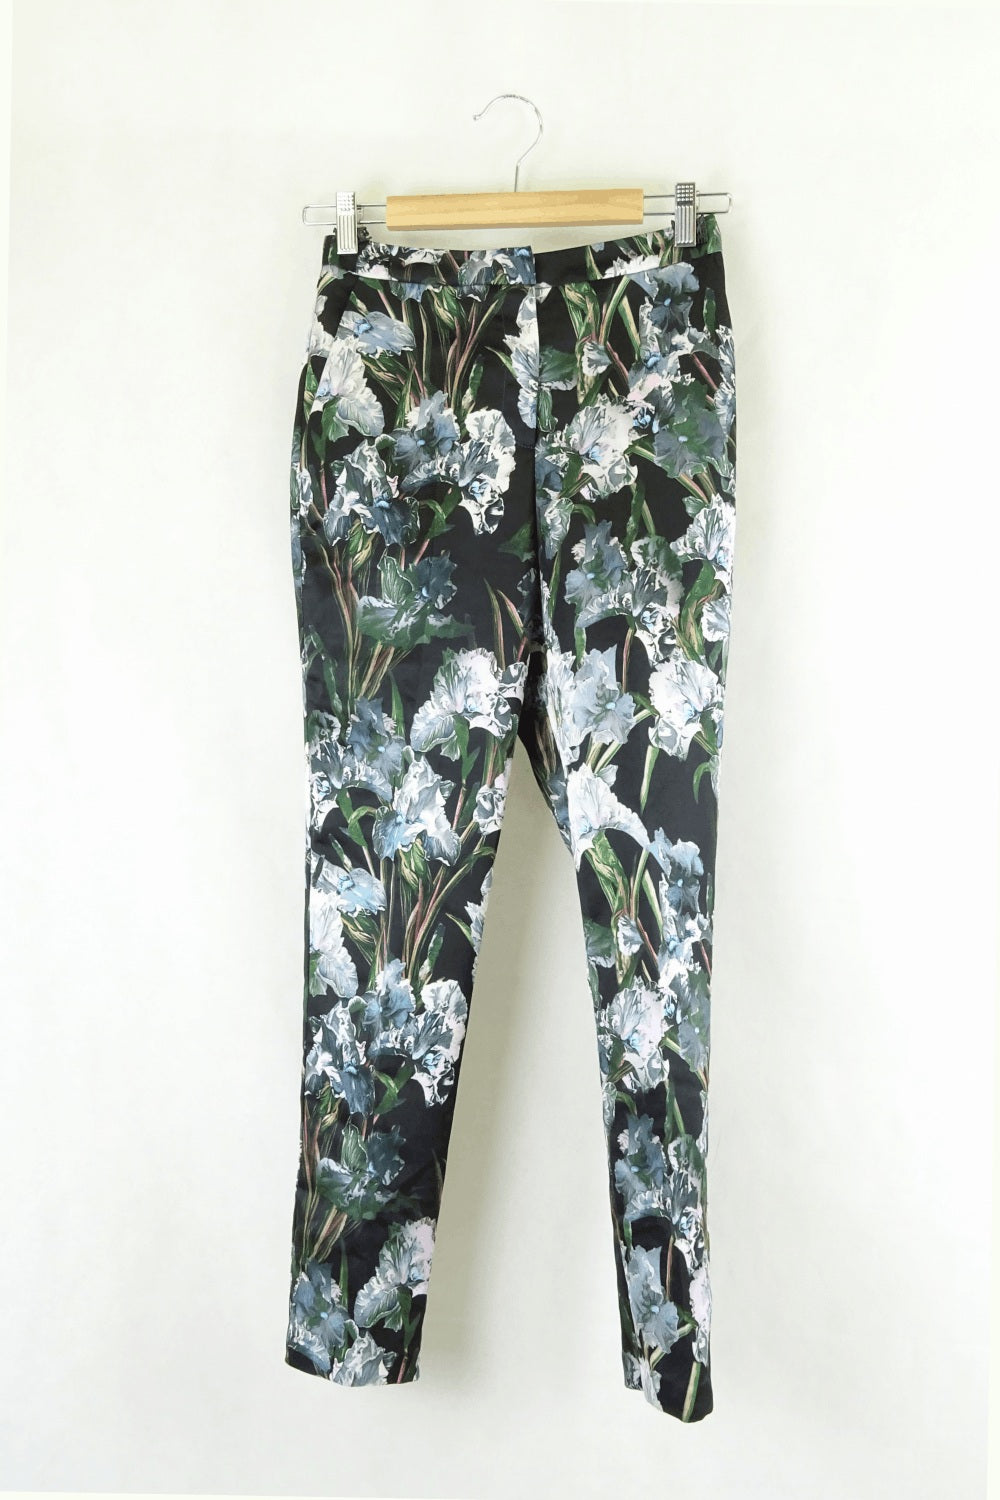 Asos Floral Tropical Pants 4